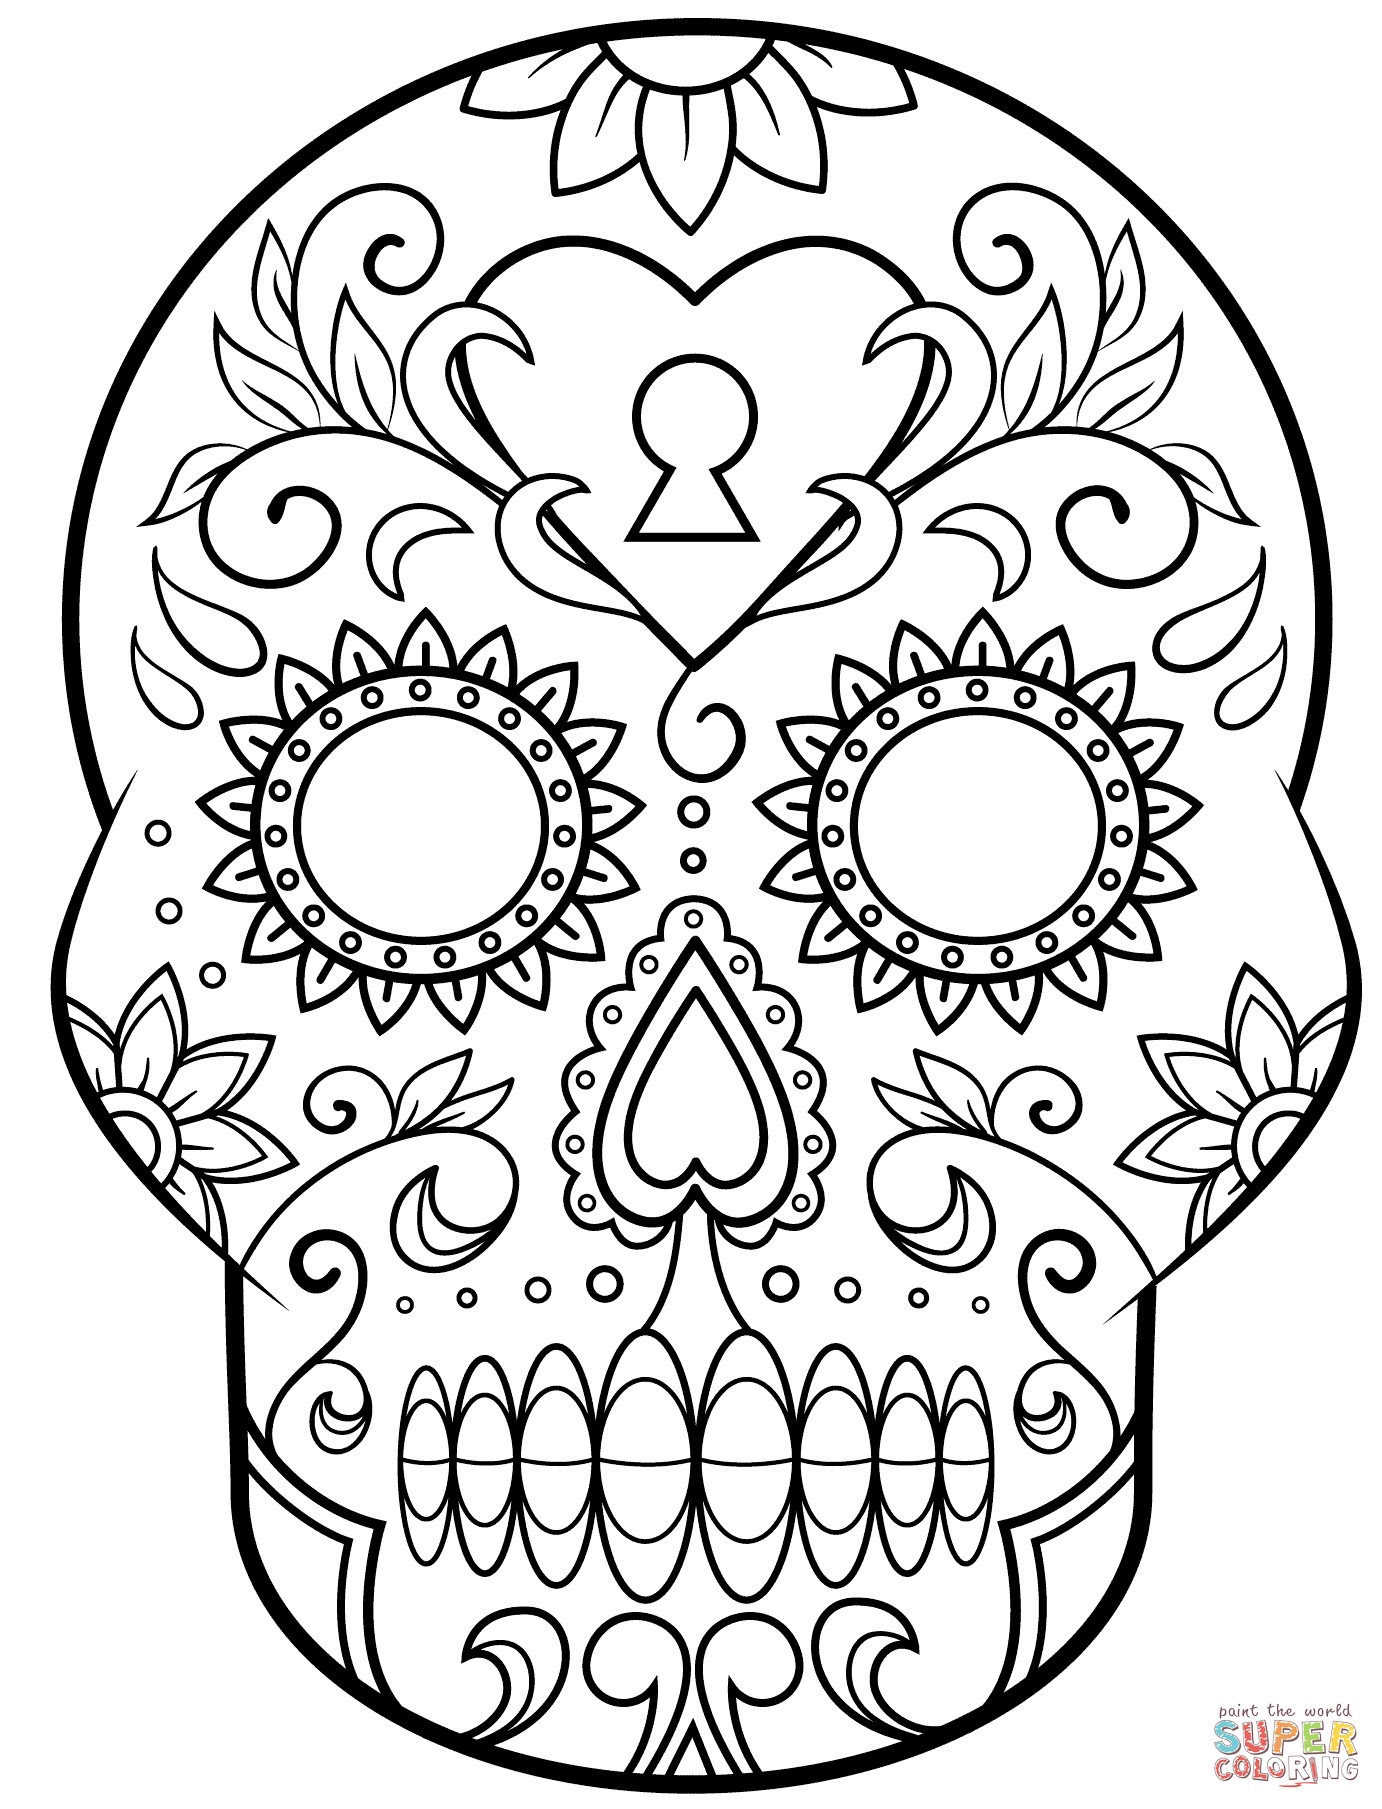 Sugar Skull Coloring Sheet
 Day of the Dead Sugar Skull coloring page